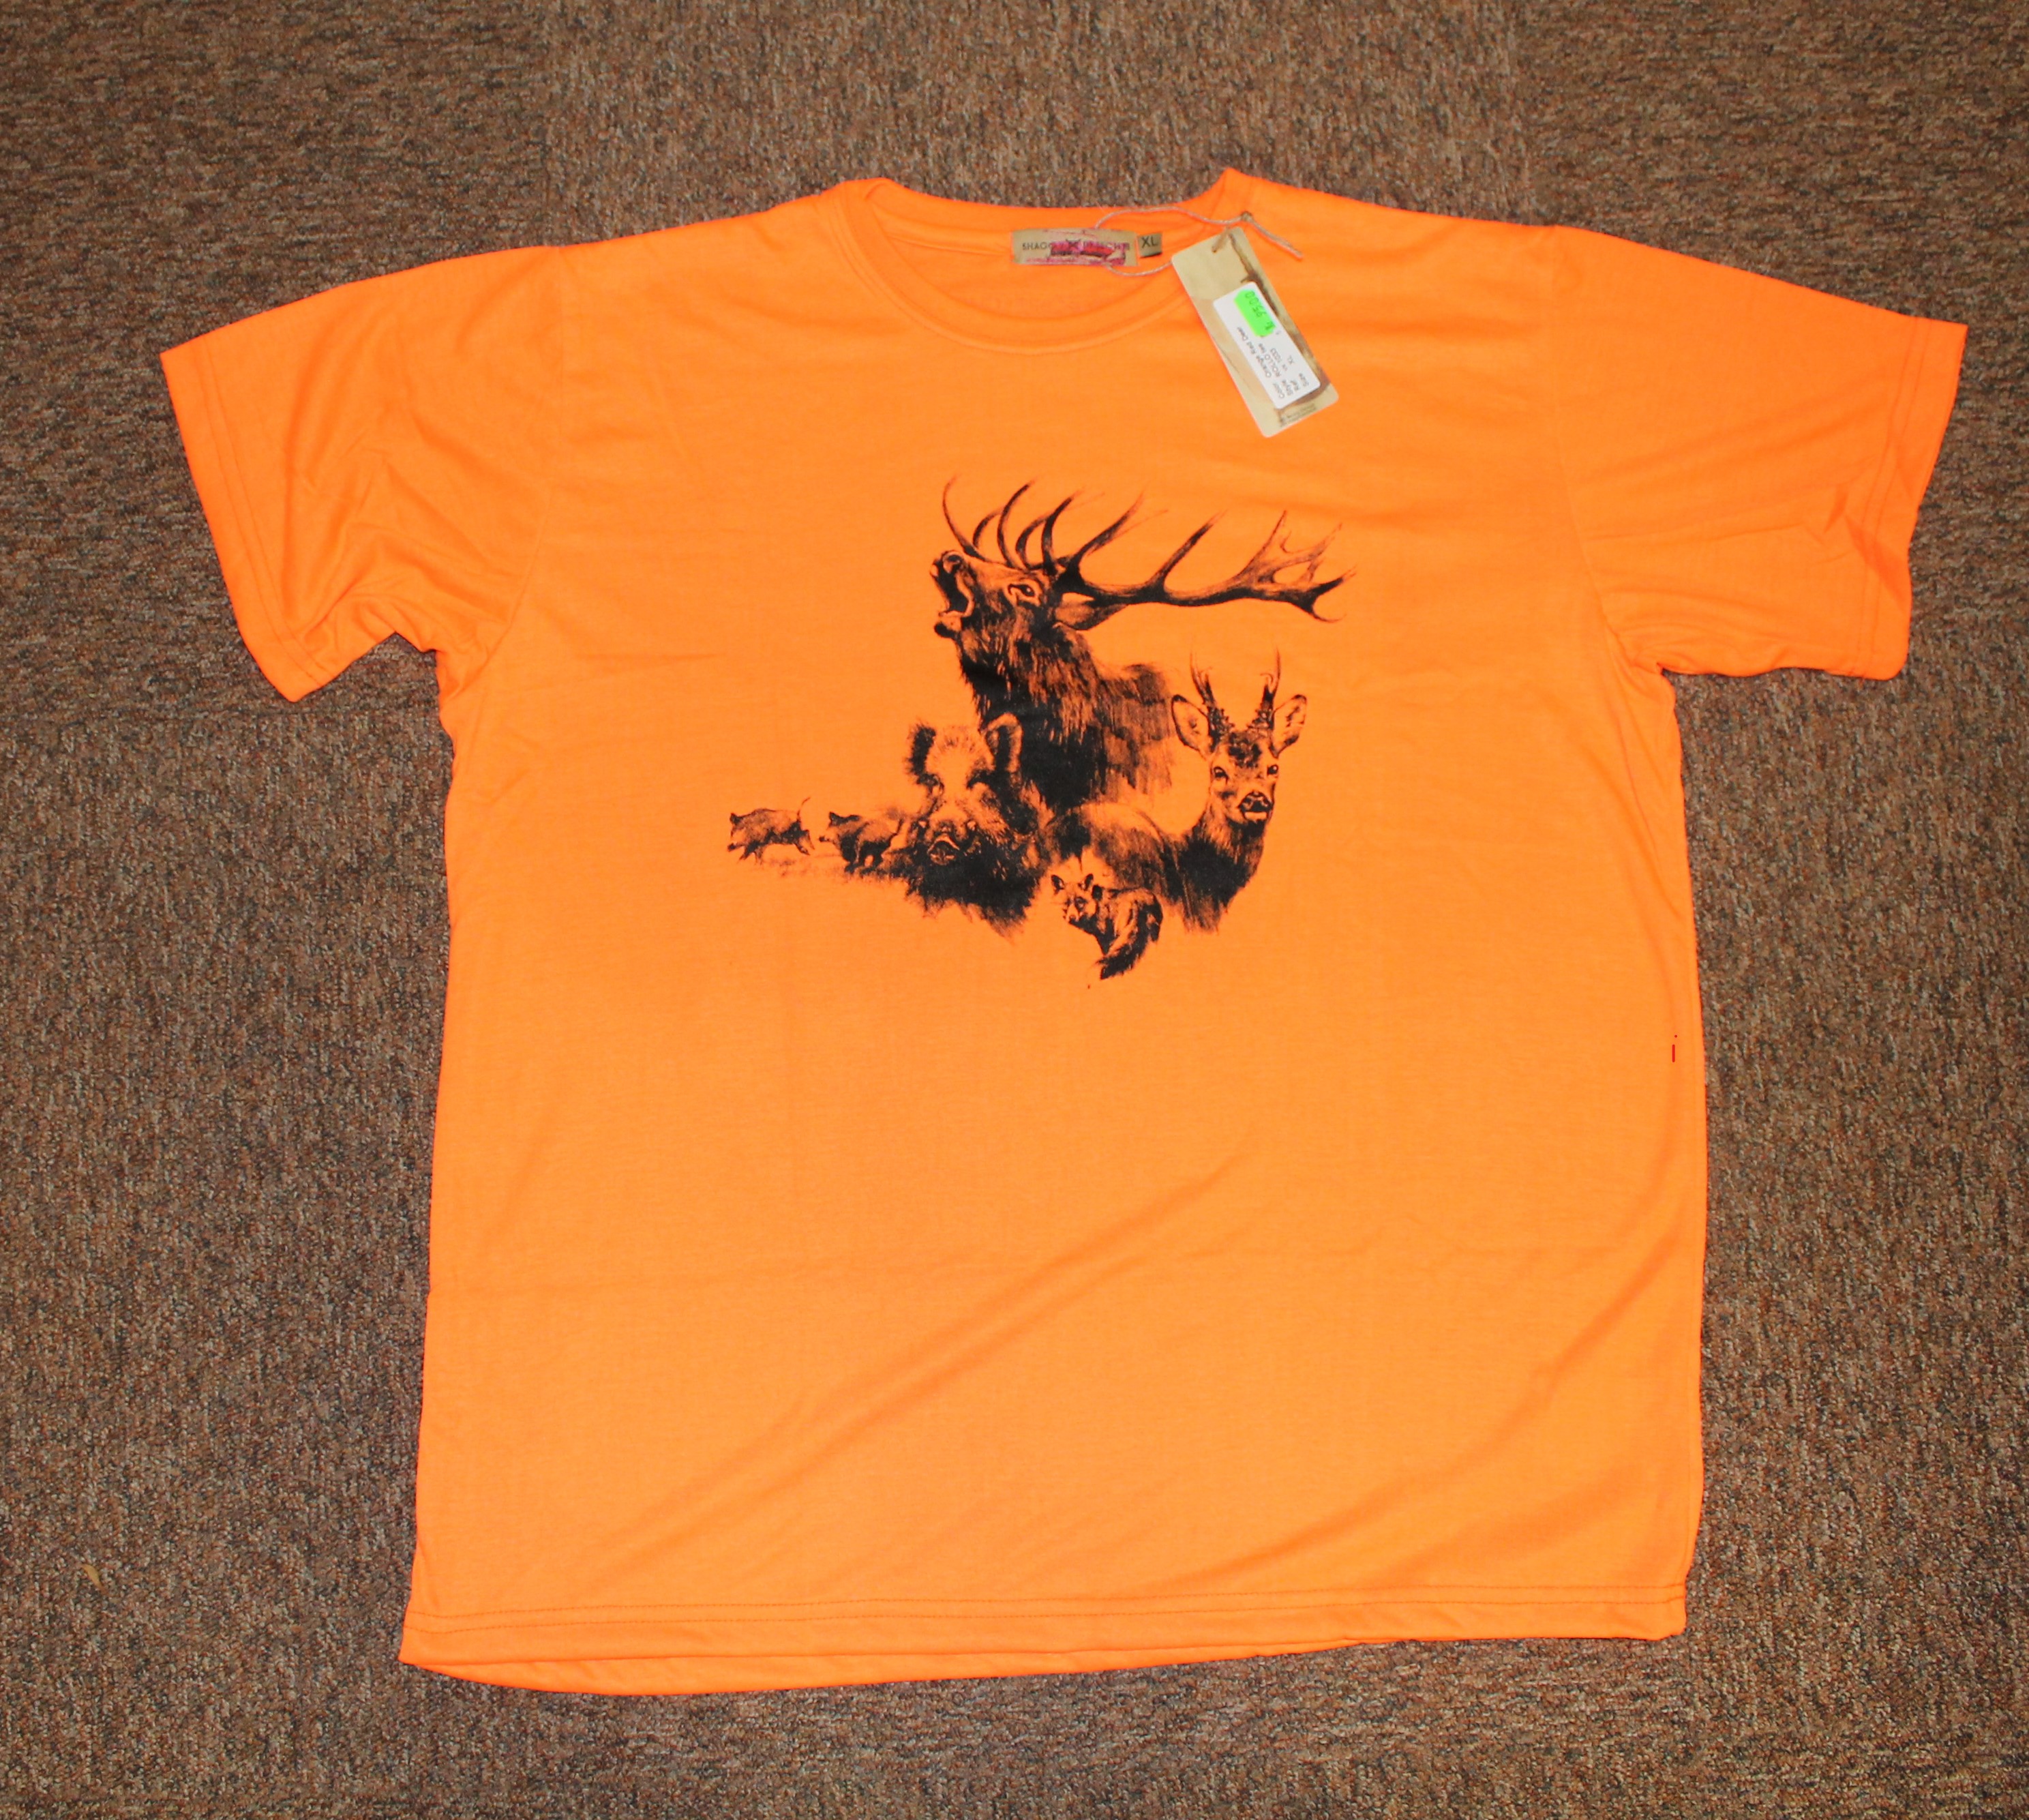 Shaggy Breeches T-shirt orange m hjortjpg